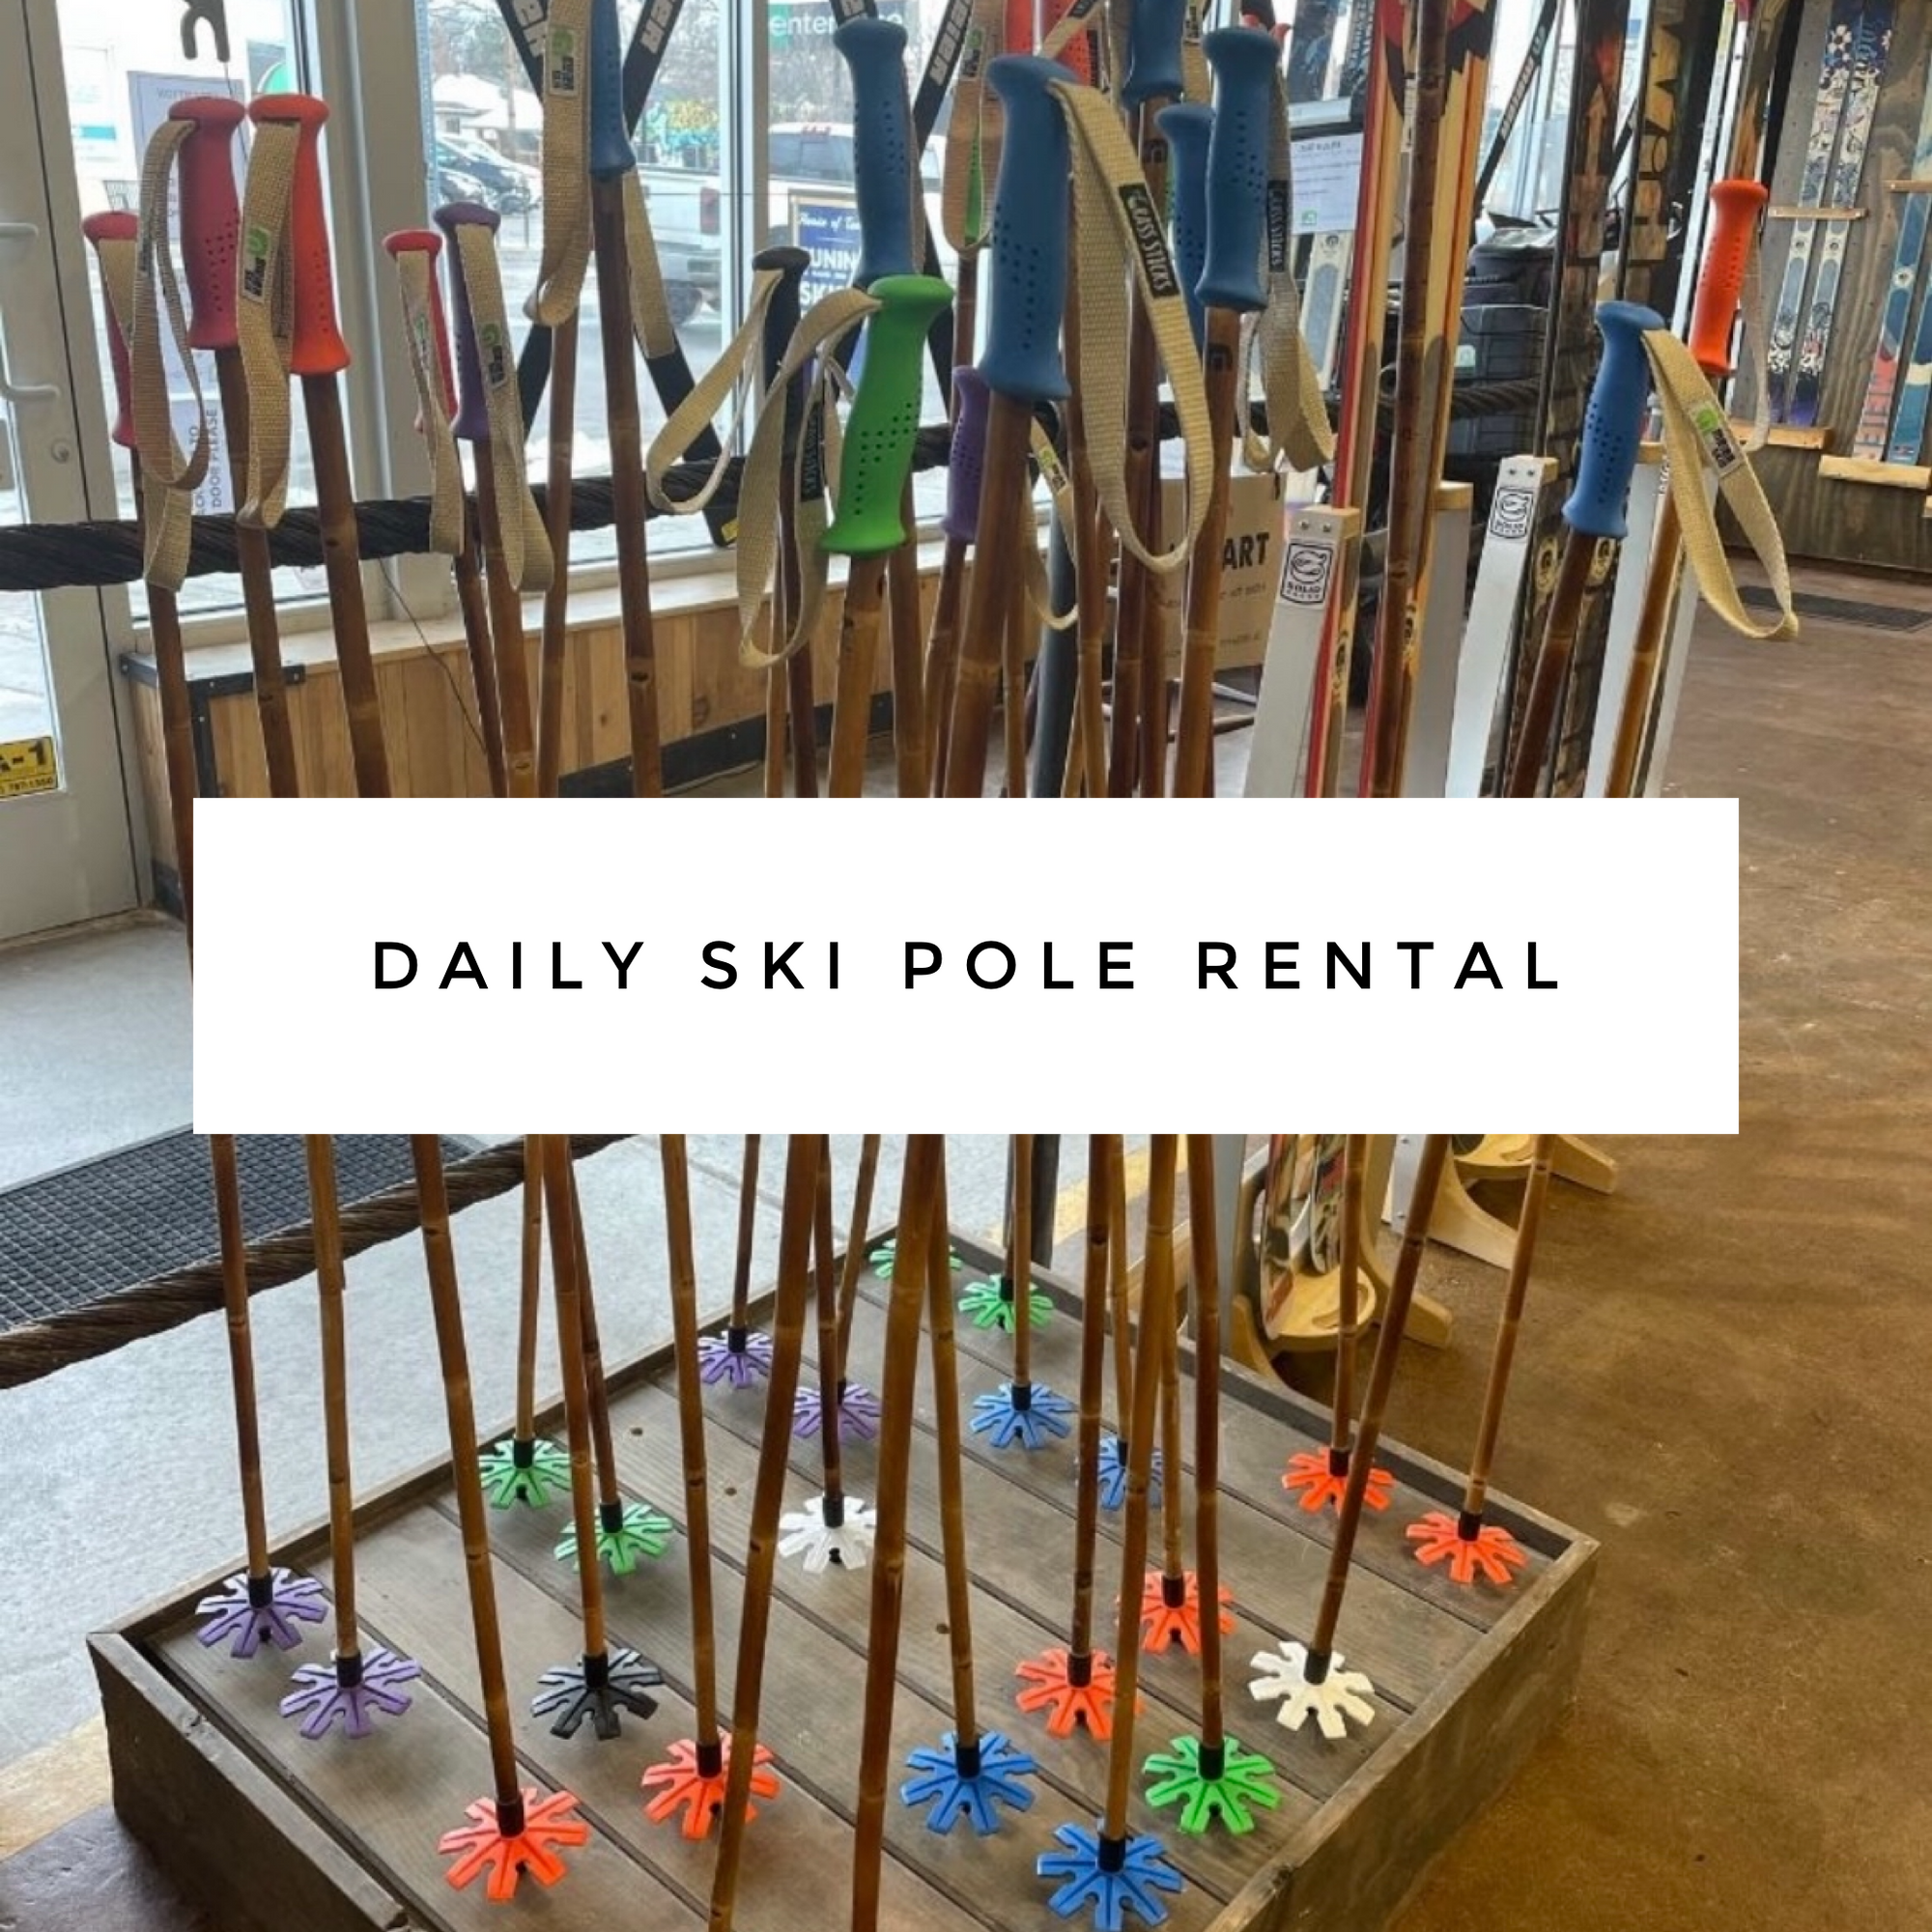 Daily ski pole rental